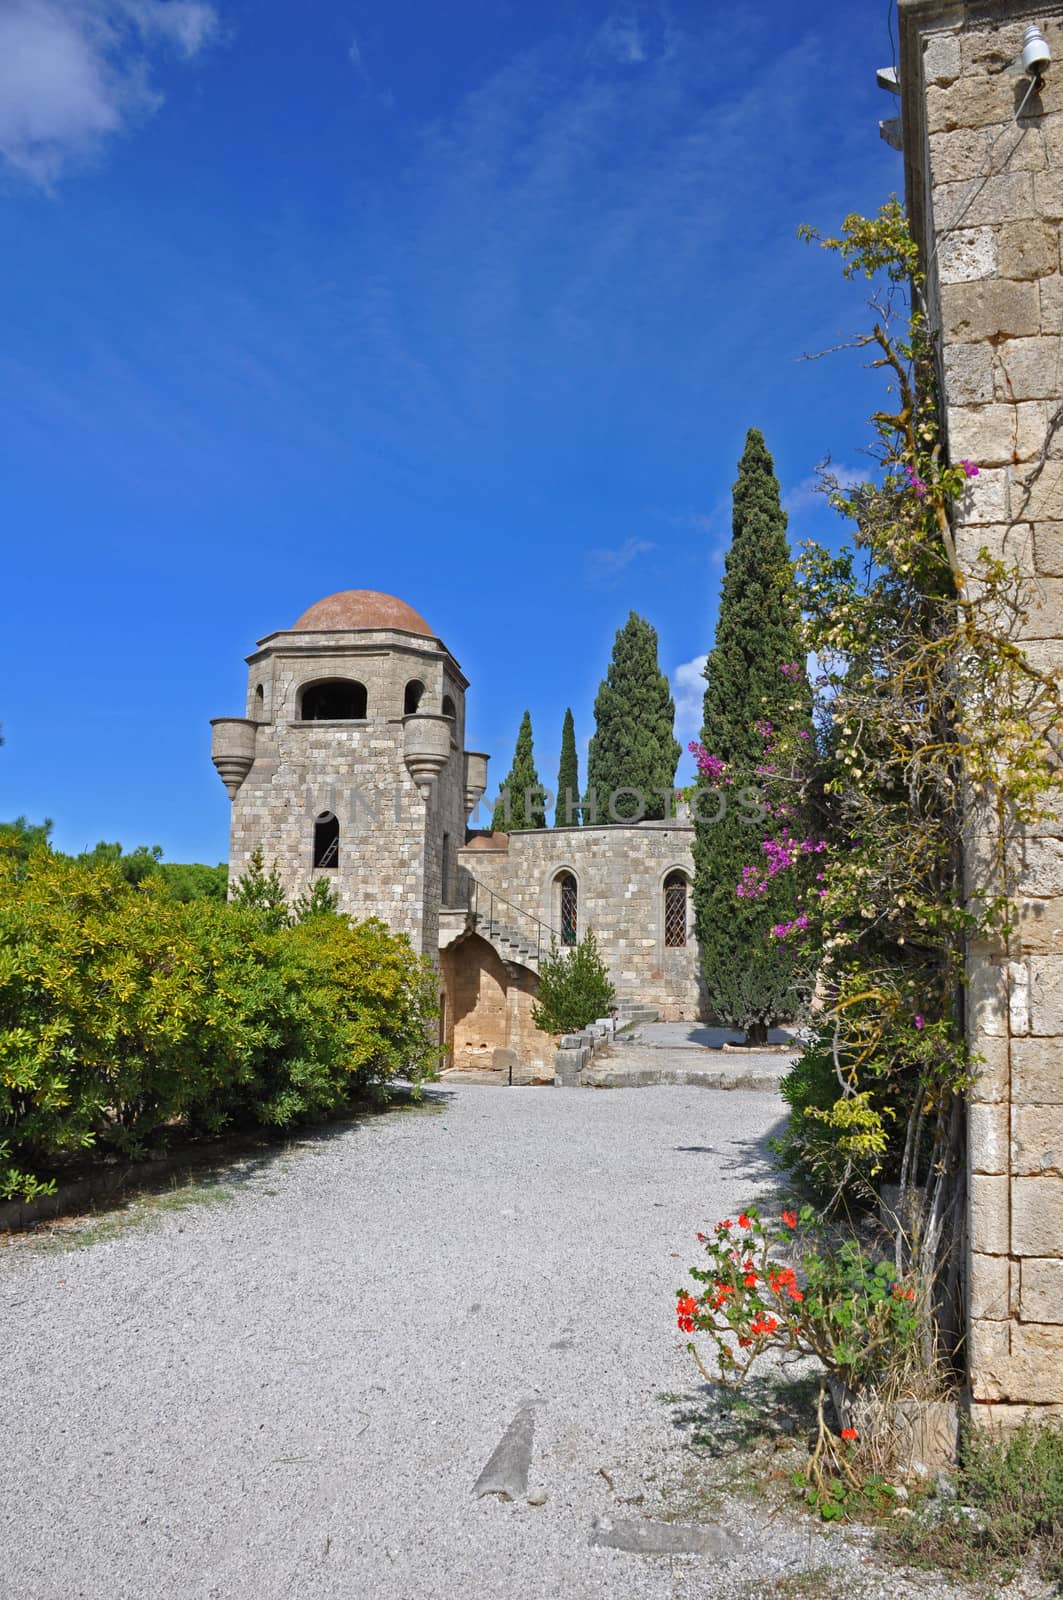 Church at Ialyssos by dpe123